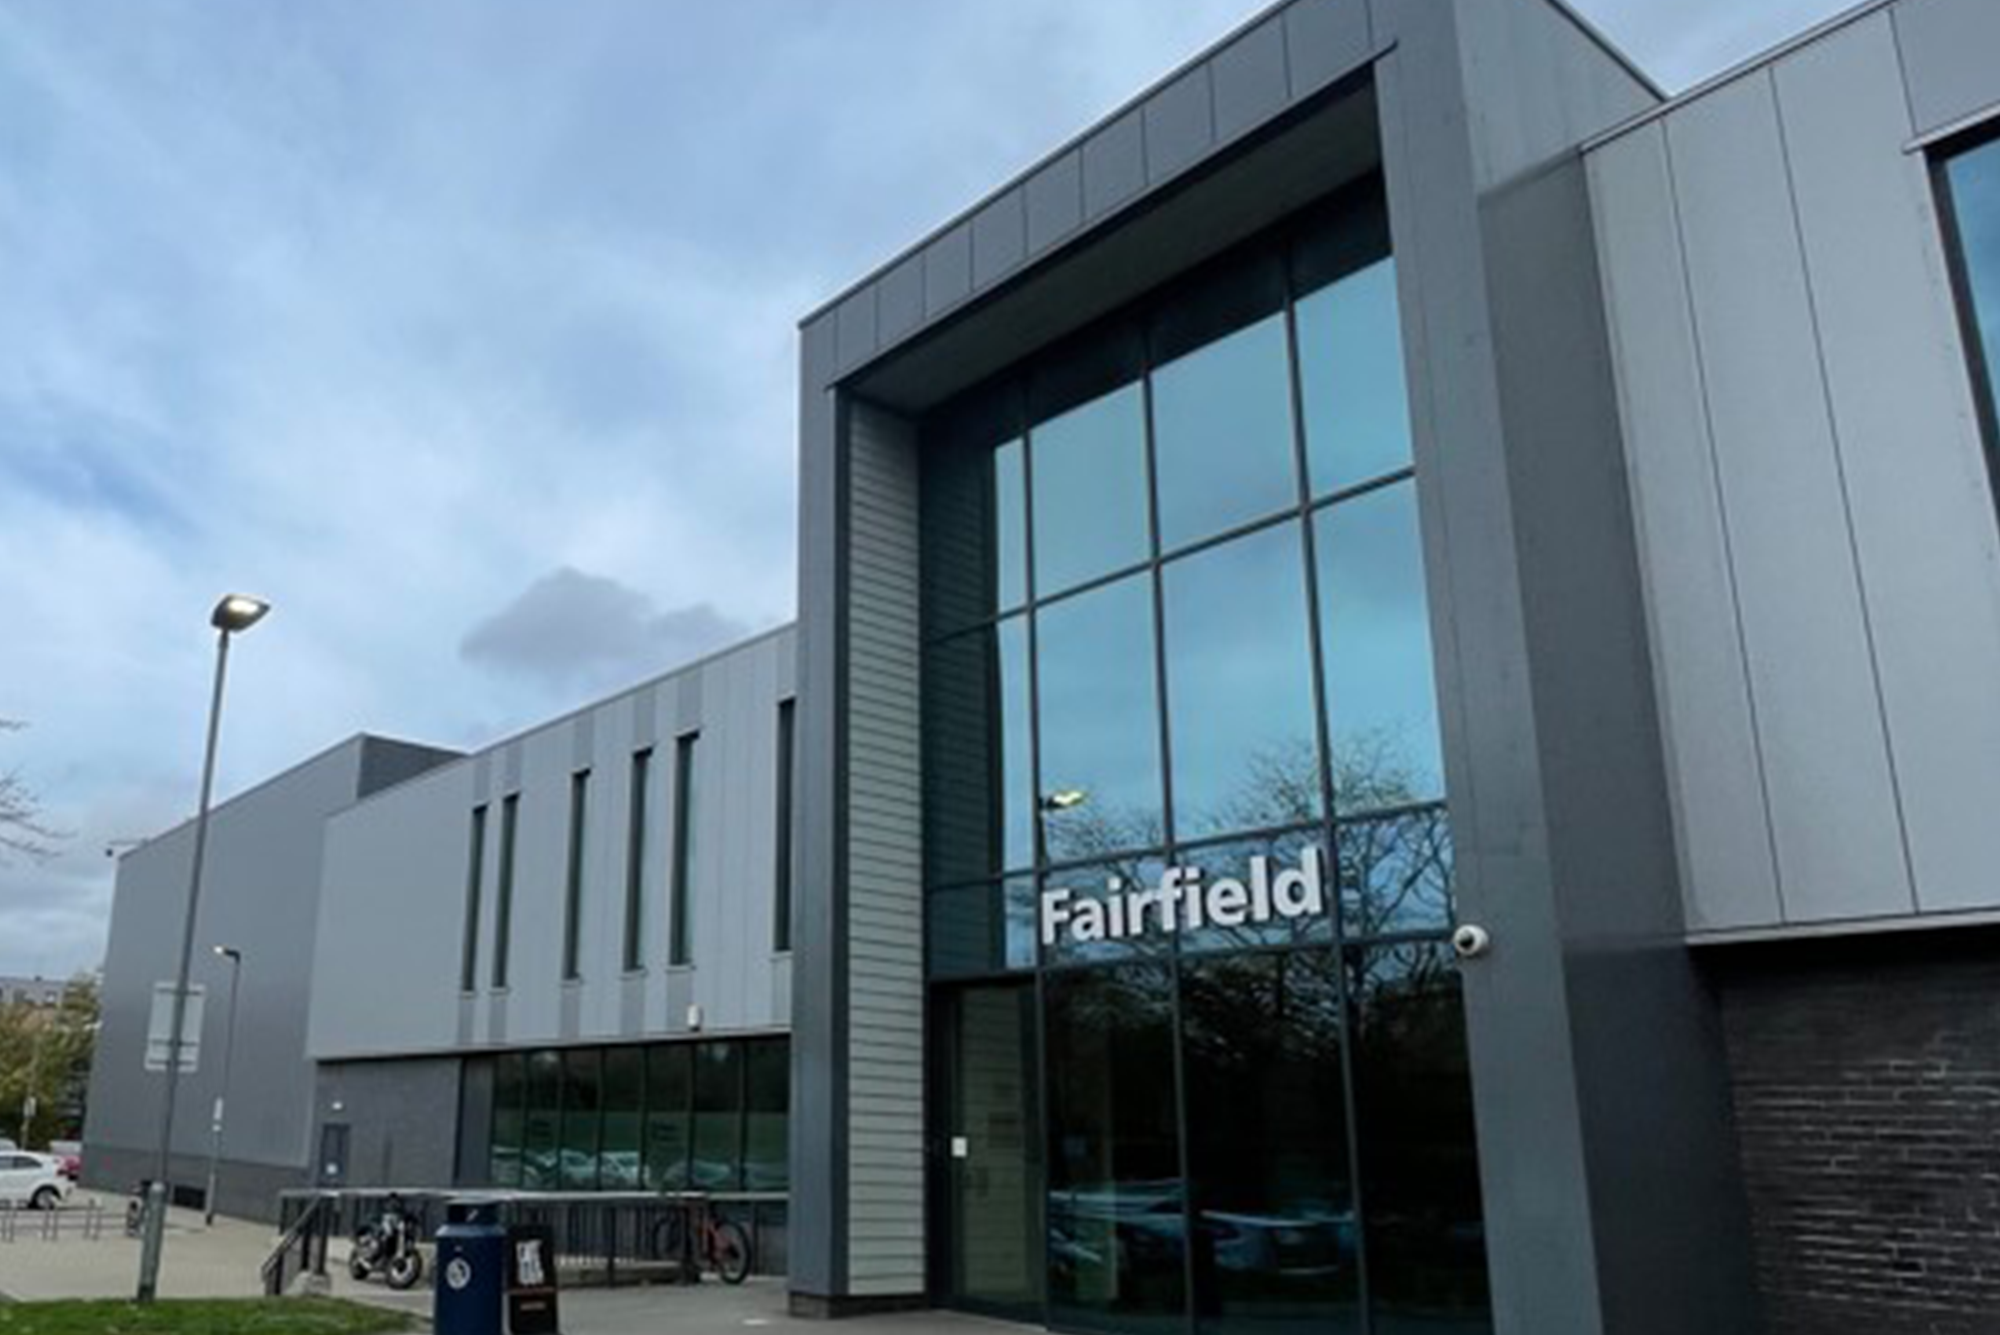 Fairfield Leisure Centre